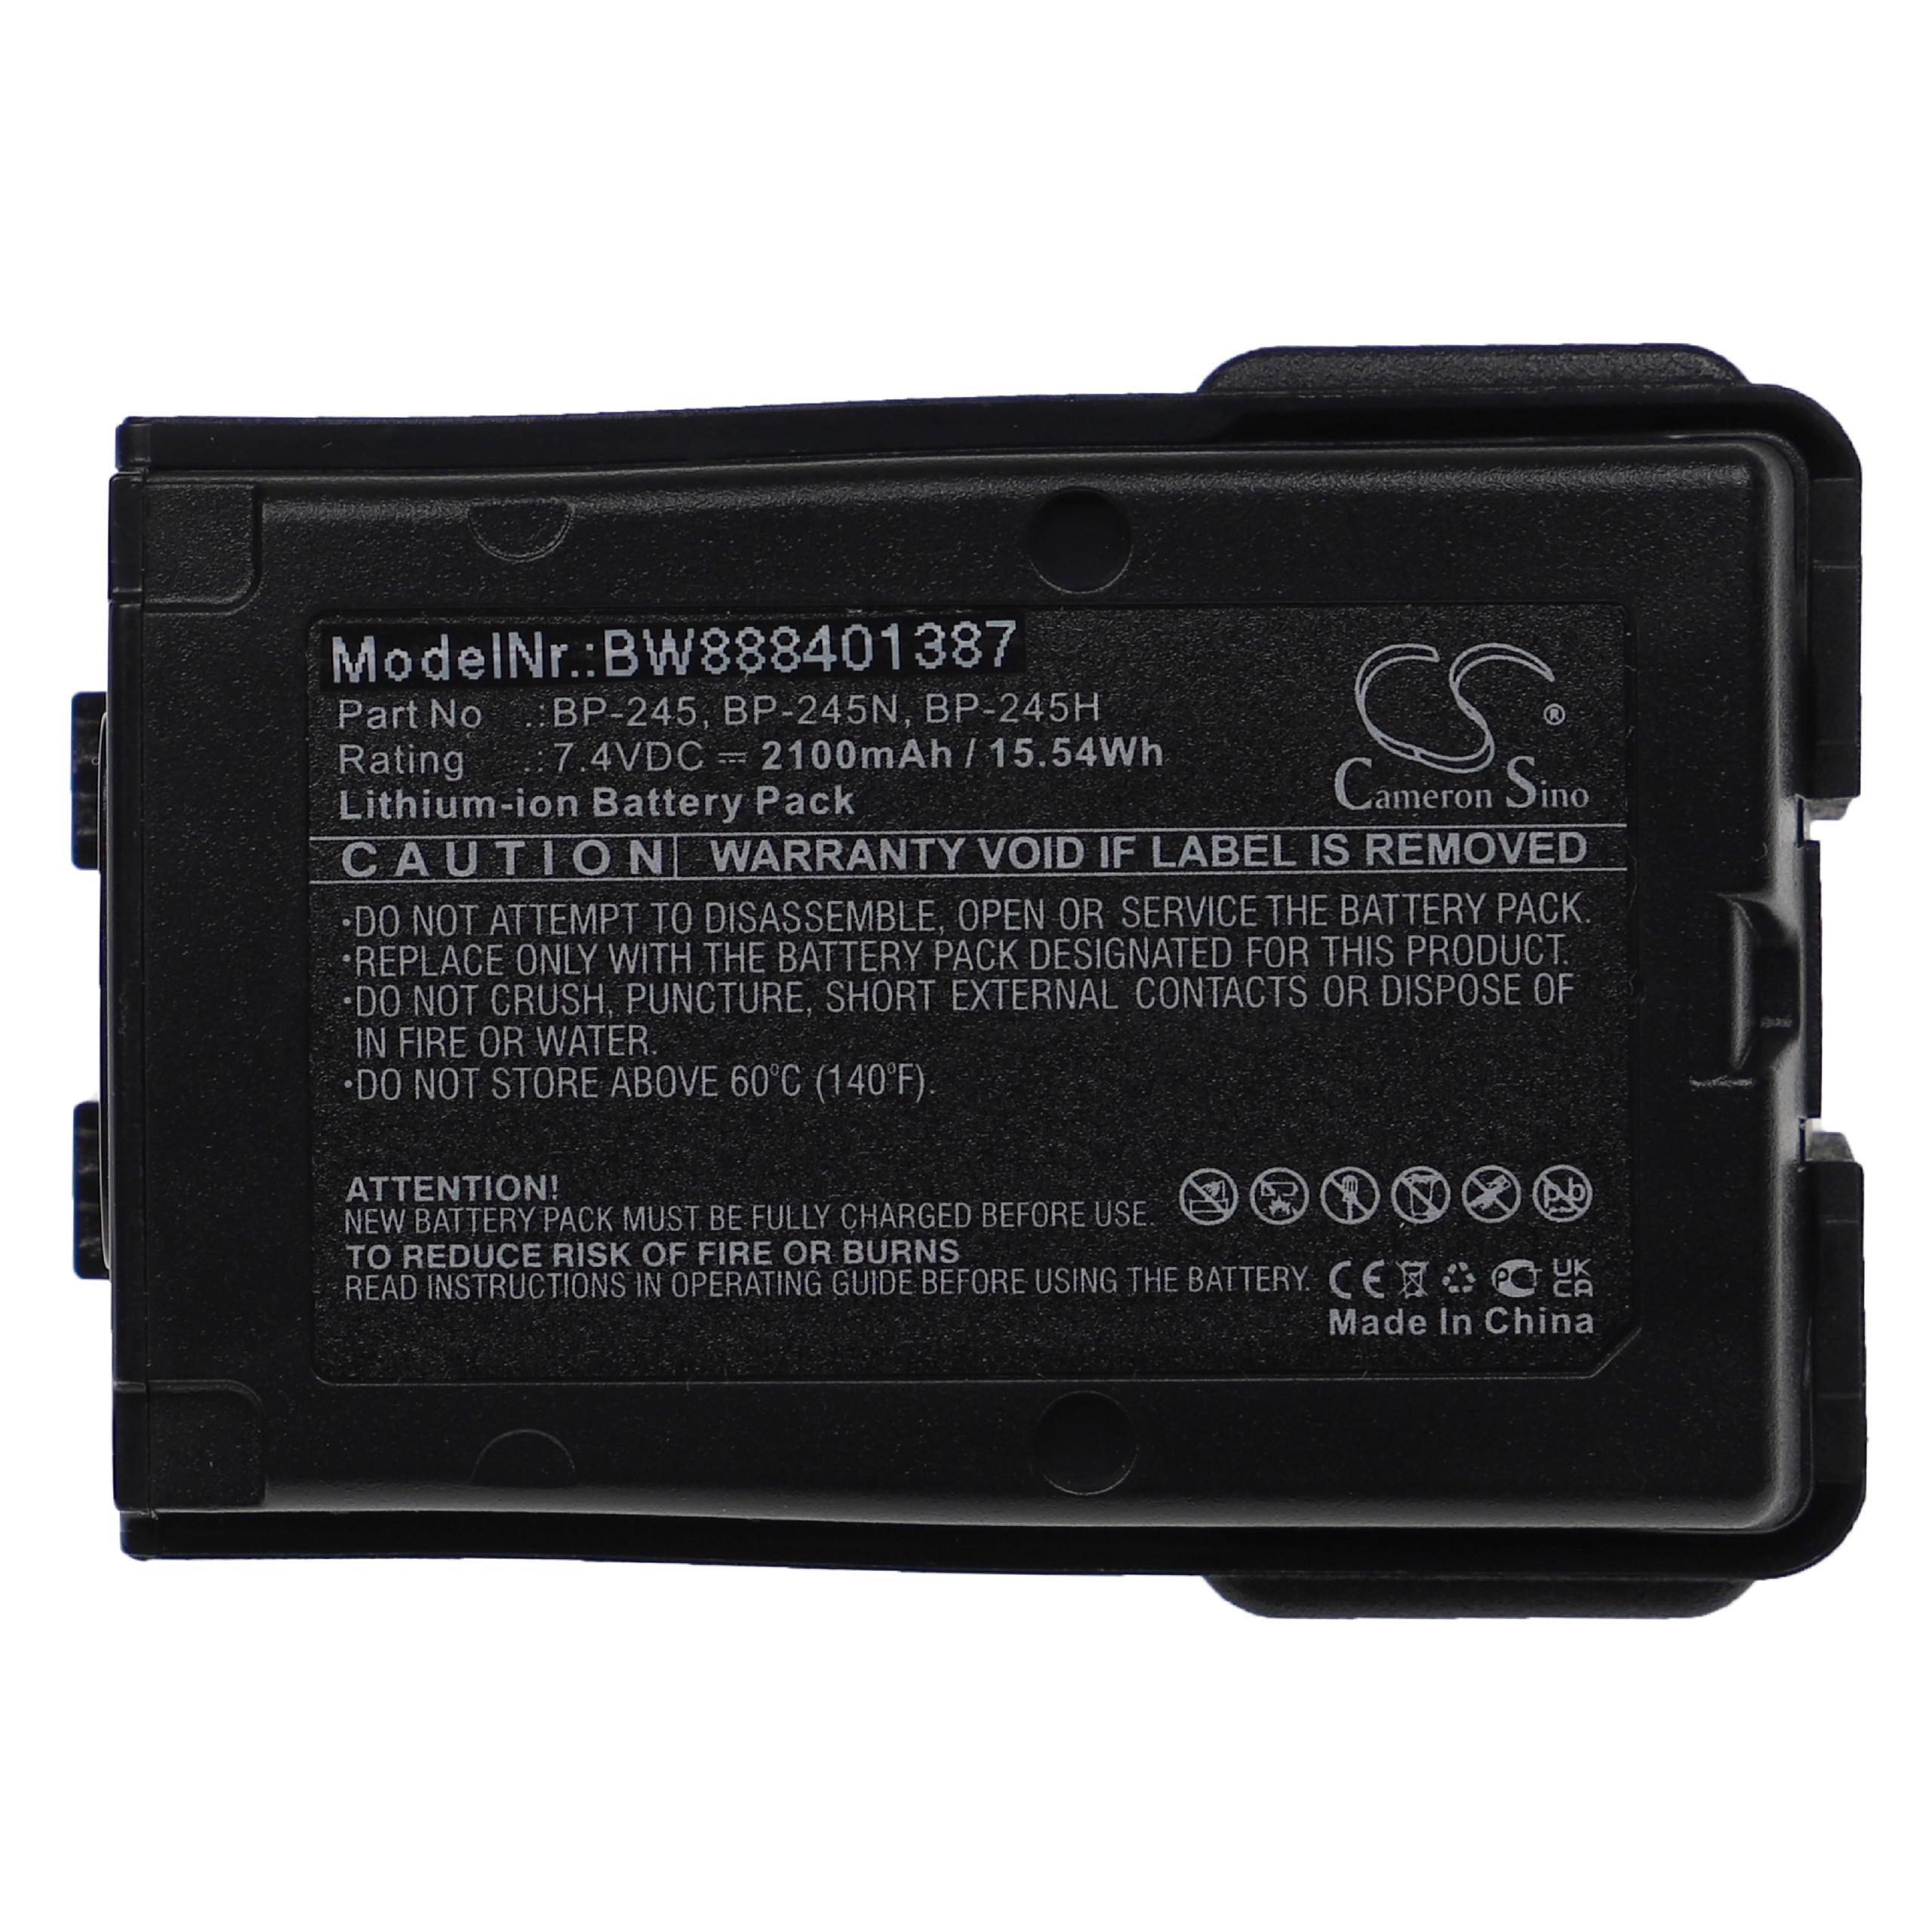 Radio Battery Replacement for Icom BP-245H, BP-245N, BP-245 - 2100mAh 7.4V Li-Ion